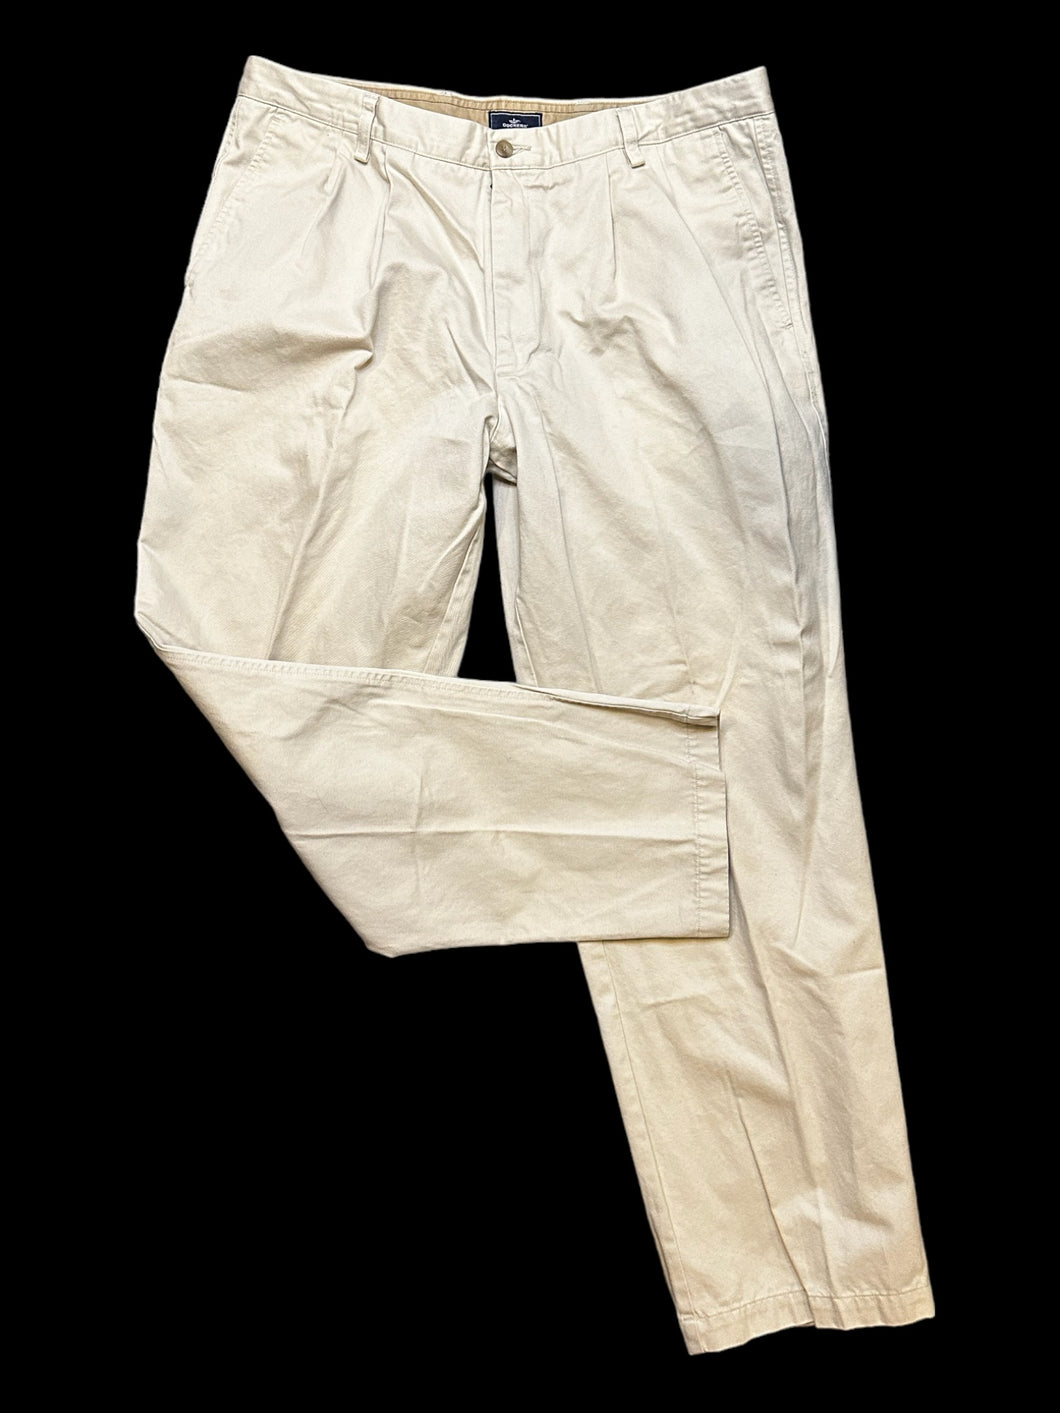 0X Light khaki cotton pants w/ pleating, belt loops, pockets, & button/zipper closure